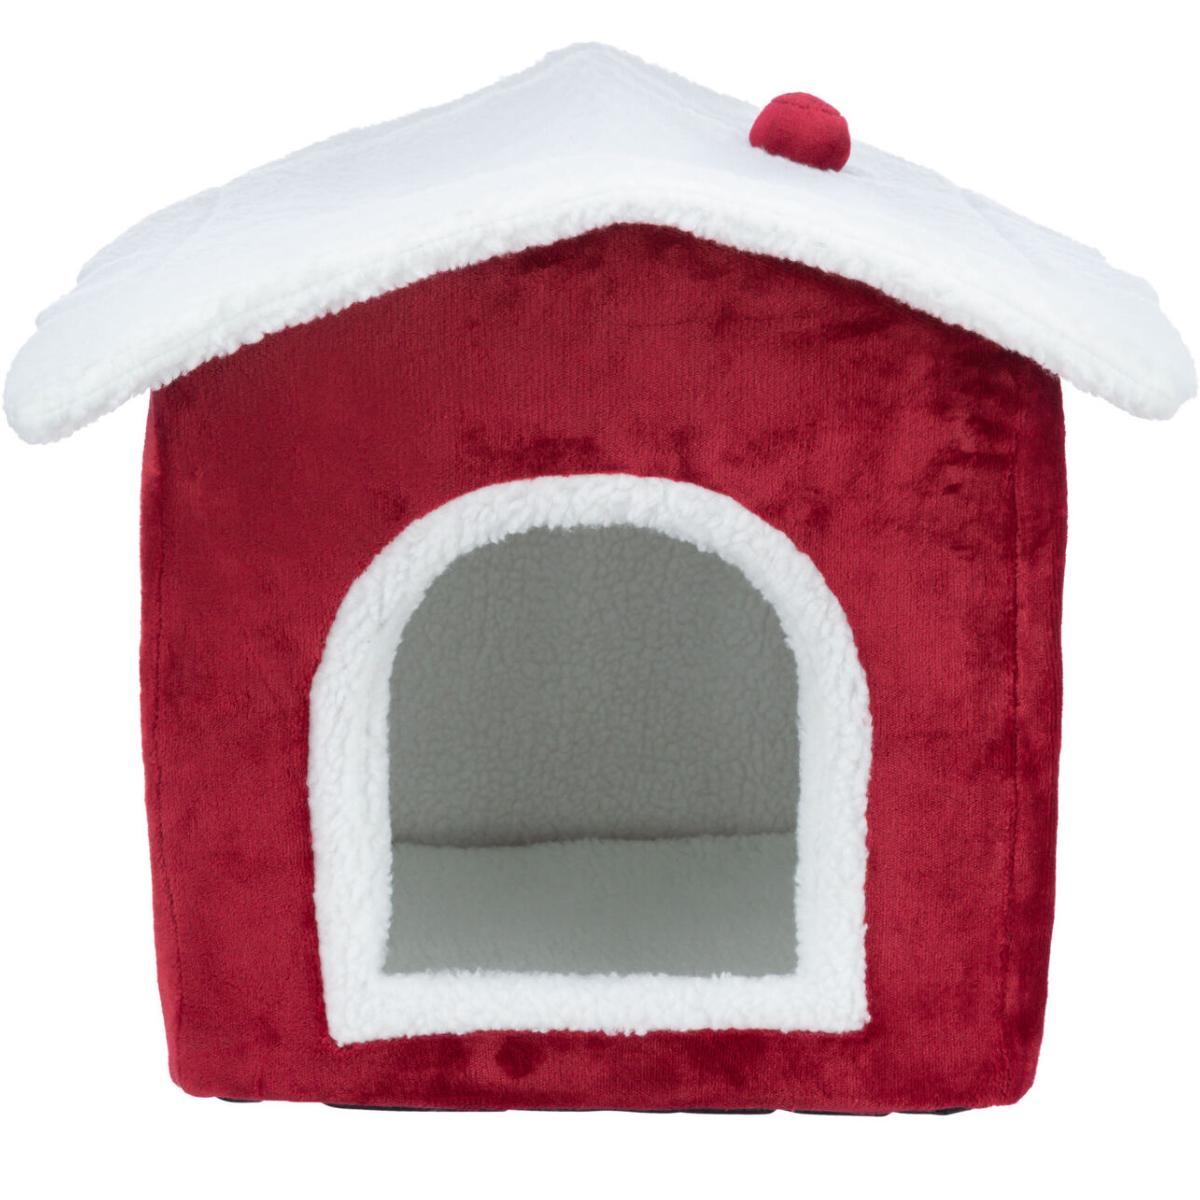 Trixie | Festive Pet Bed | Christmas Red & White Nevio Plush Cave